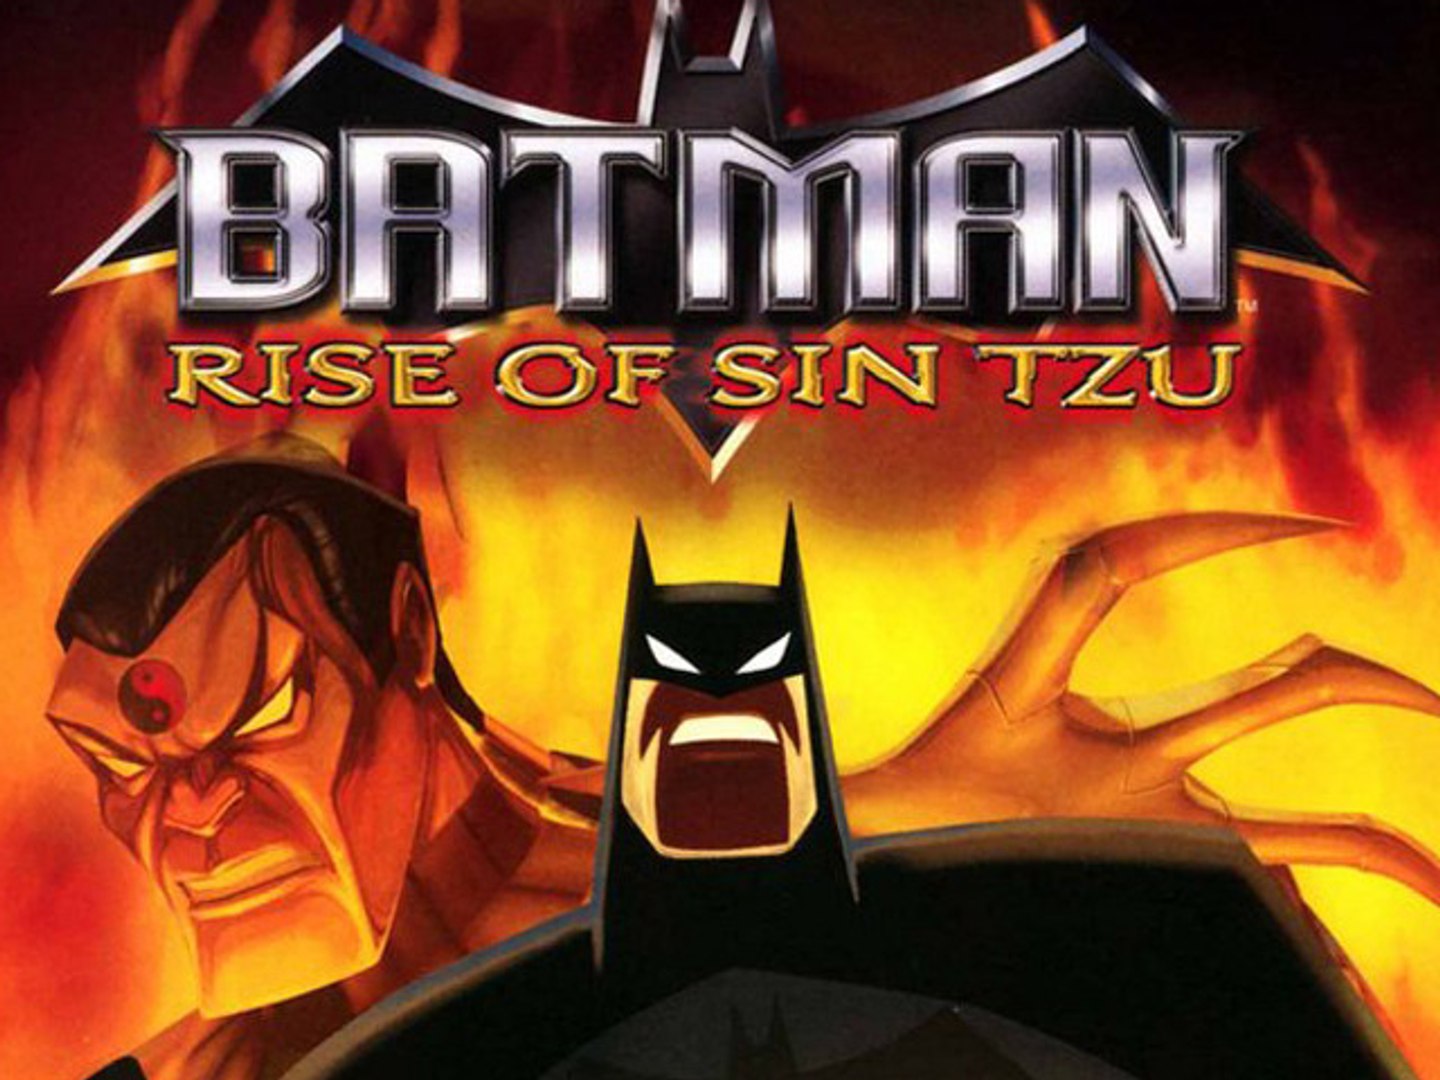 Jogo Batman - Rise Of Sin Tzu - Ps2 - Original Completo